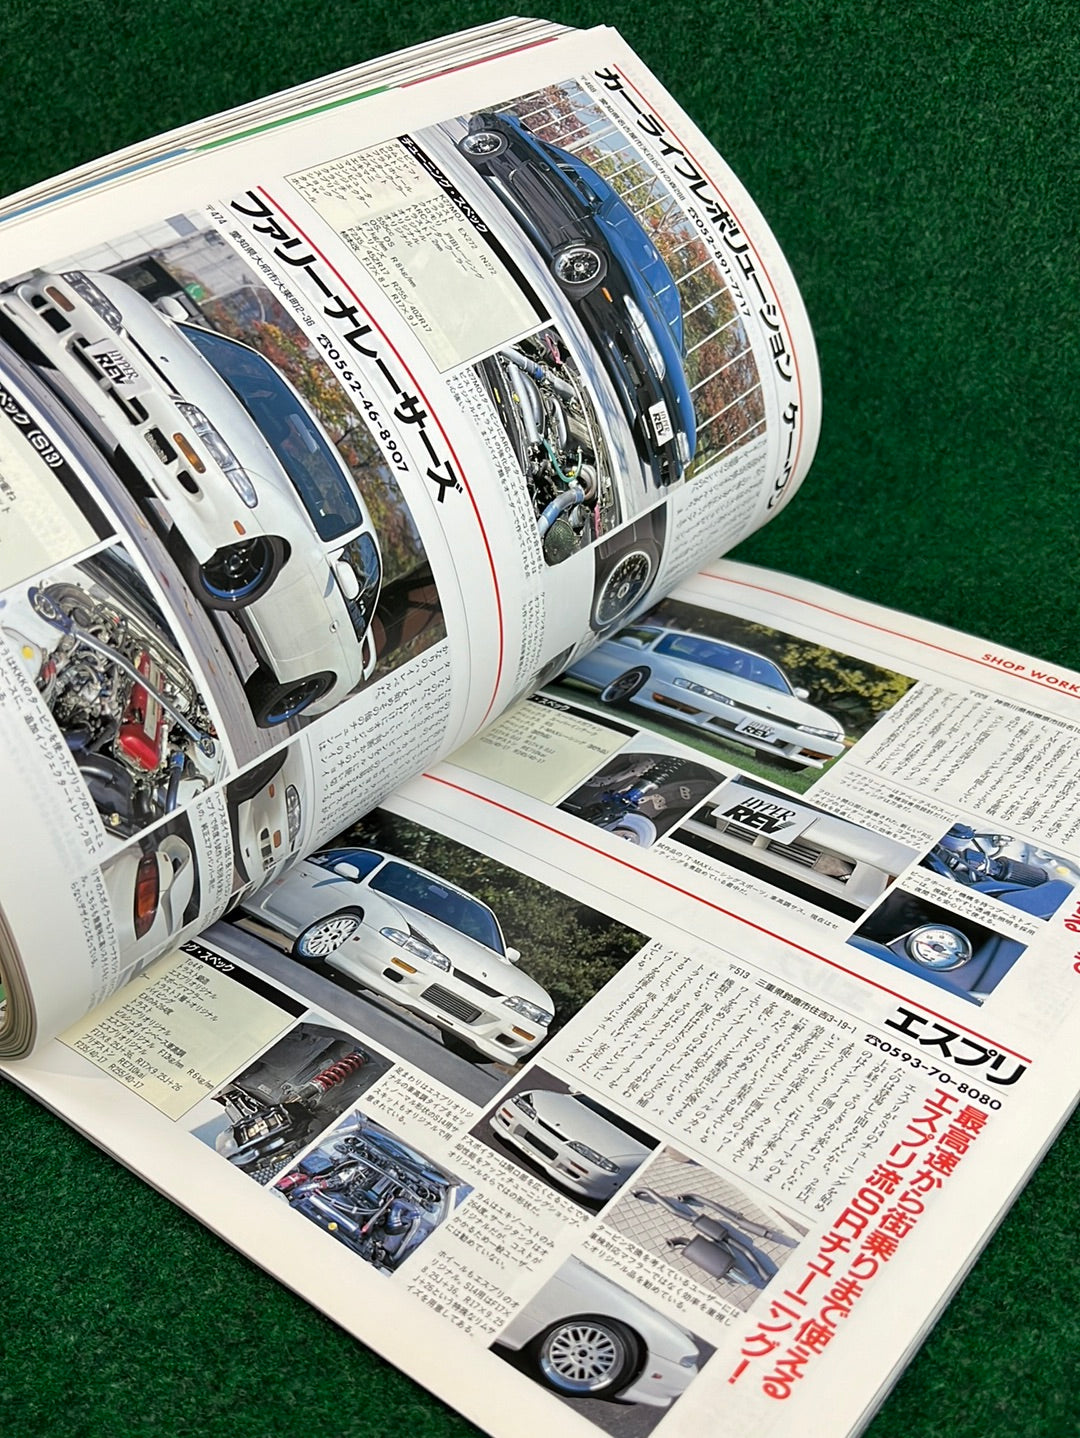 Hyper Rev Magazine - Nissan Silvia S14 & S13 No. 2 Vol. 19